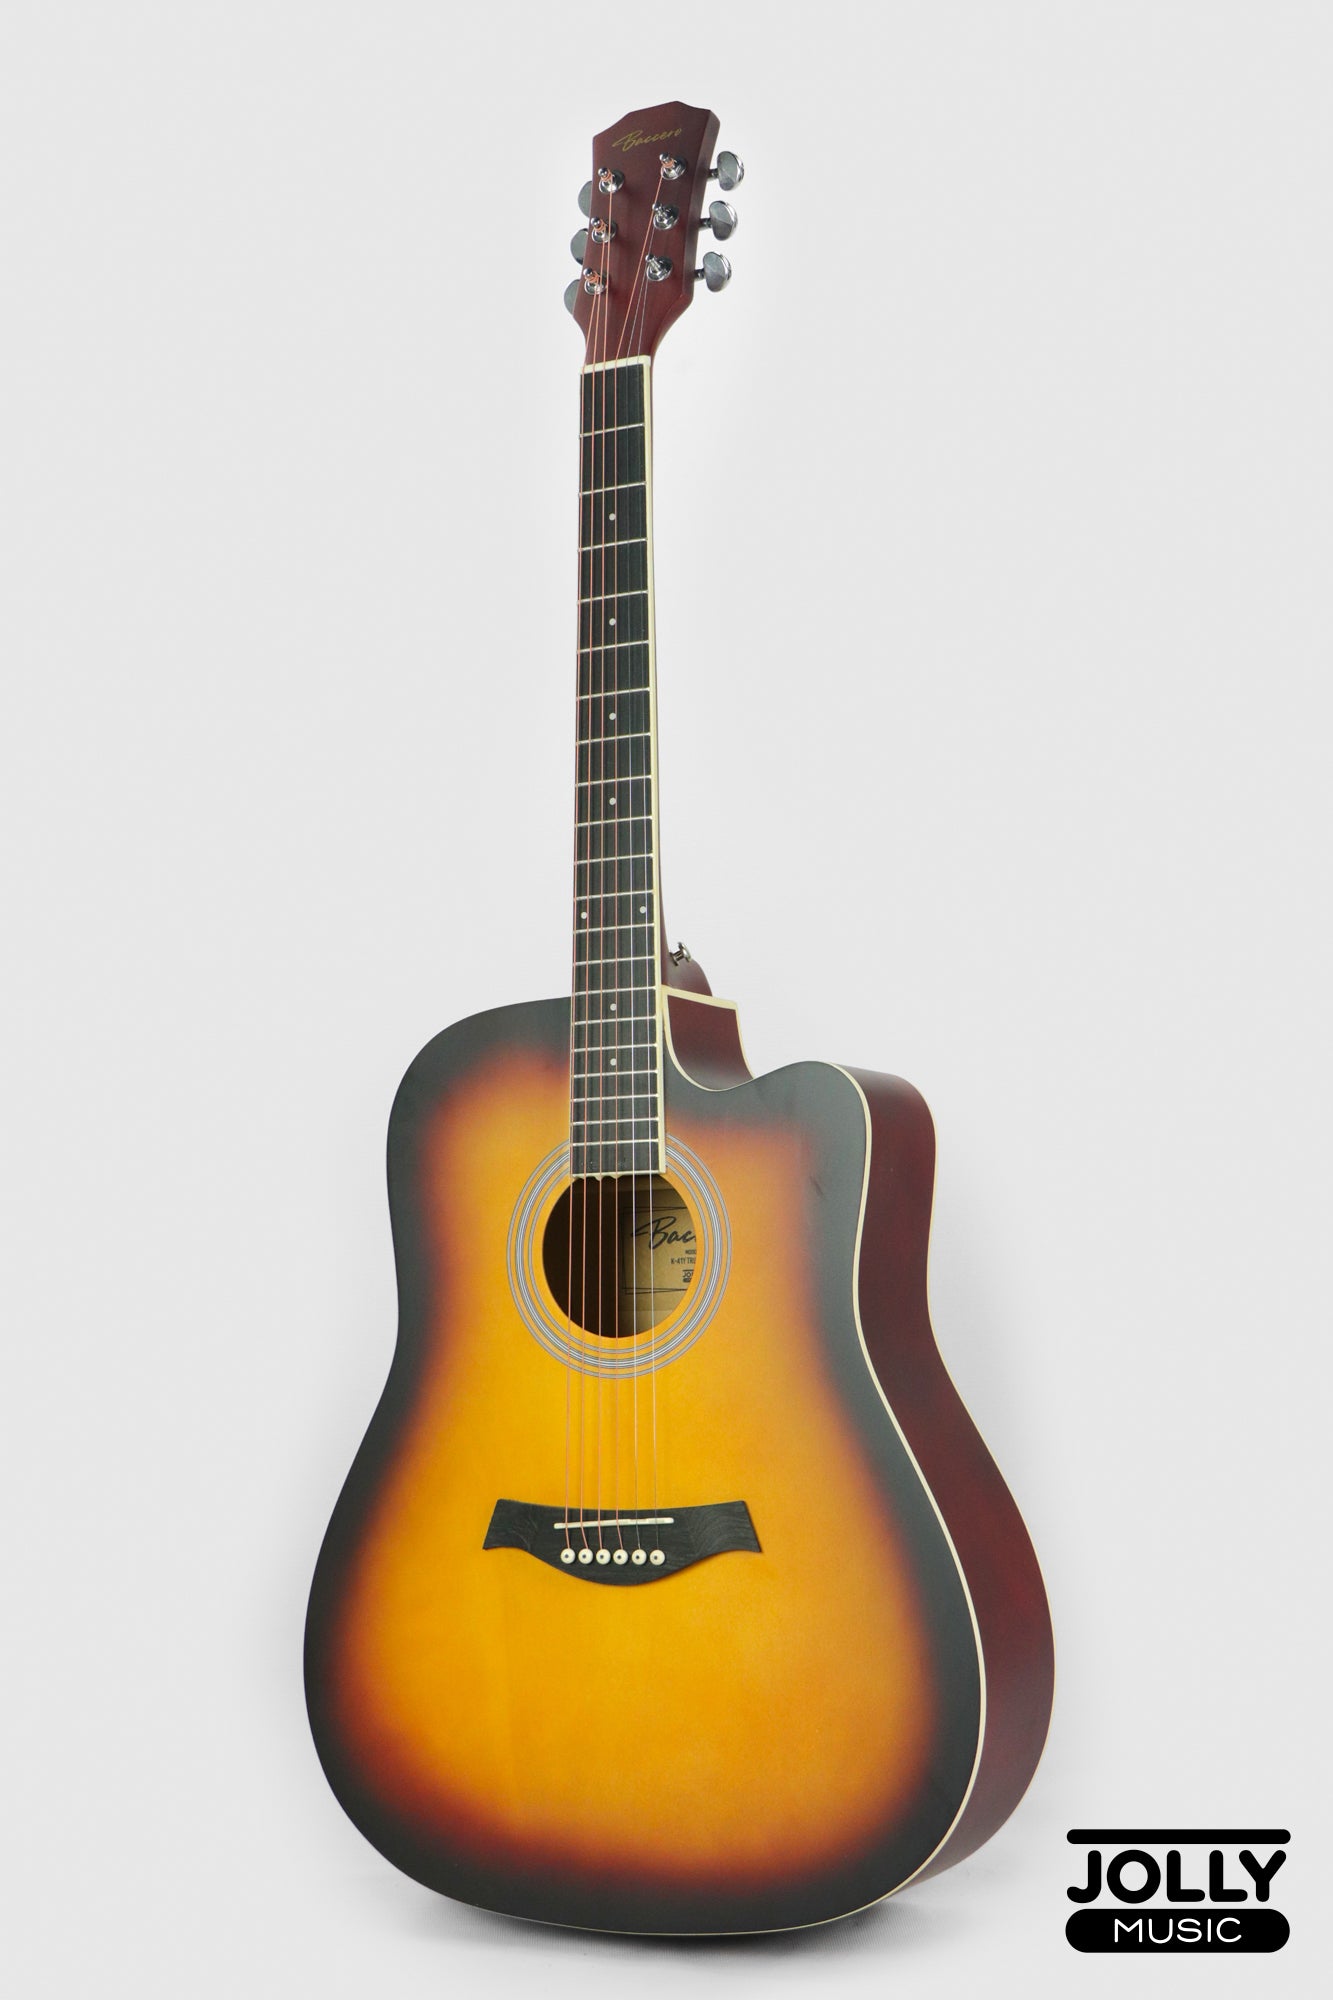 Baccero 41" Guitar KT-41Y Truss Rod w/ Case, 3 Picks, Tuner, Capo - Sunburst